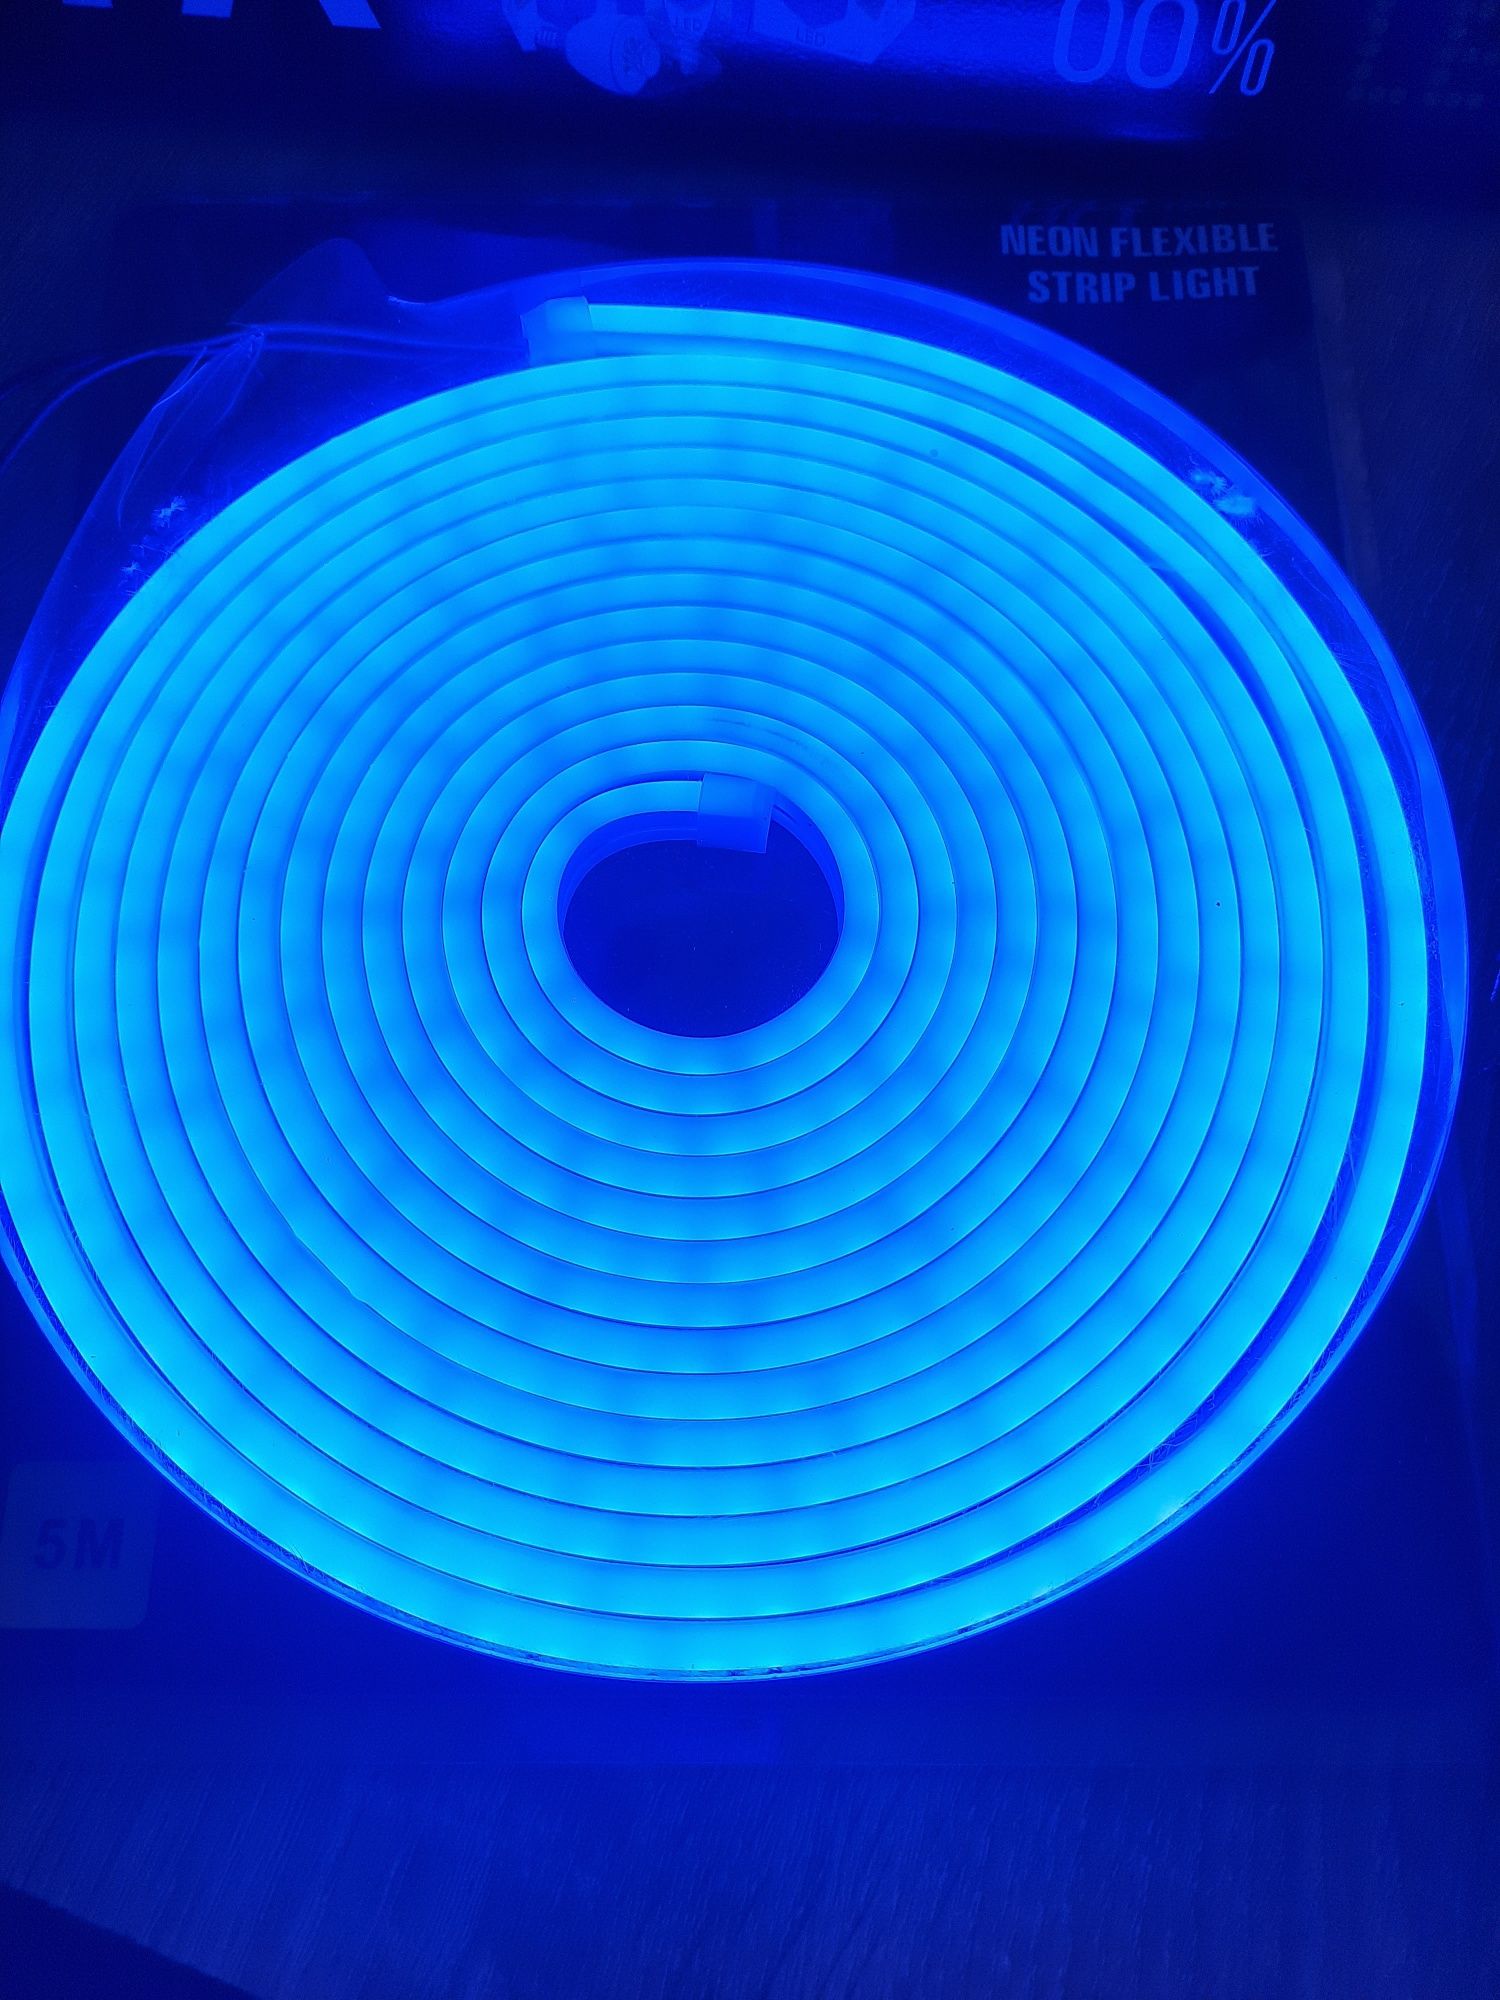 Гибкий флекс Неон подсветка (неон flexible srtip light)